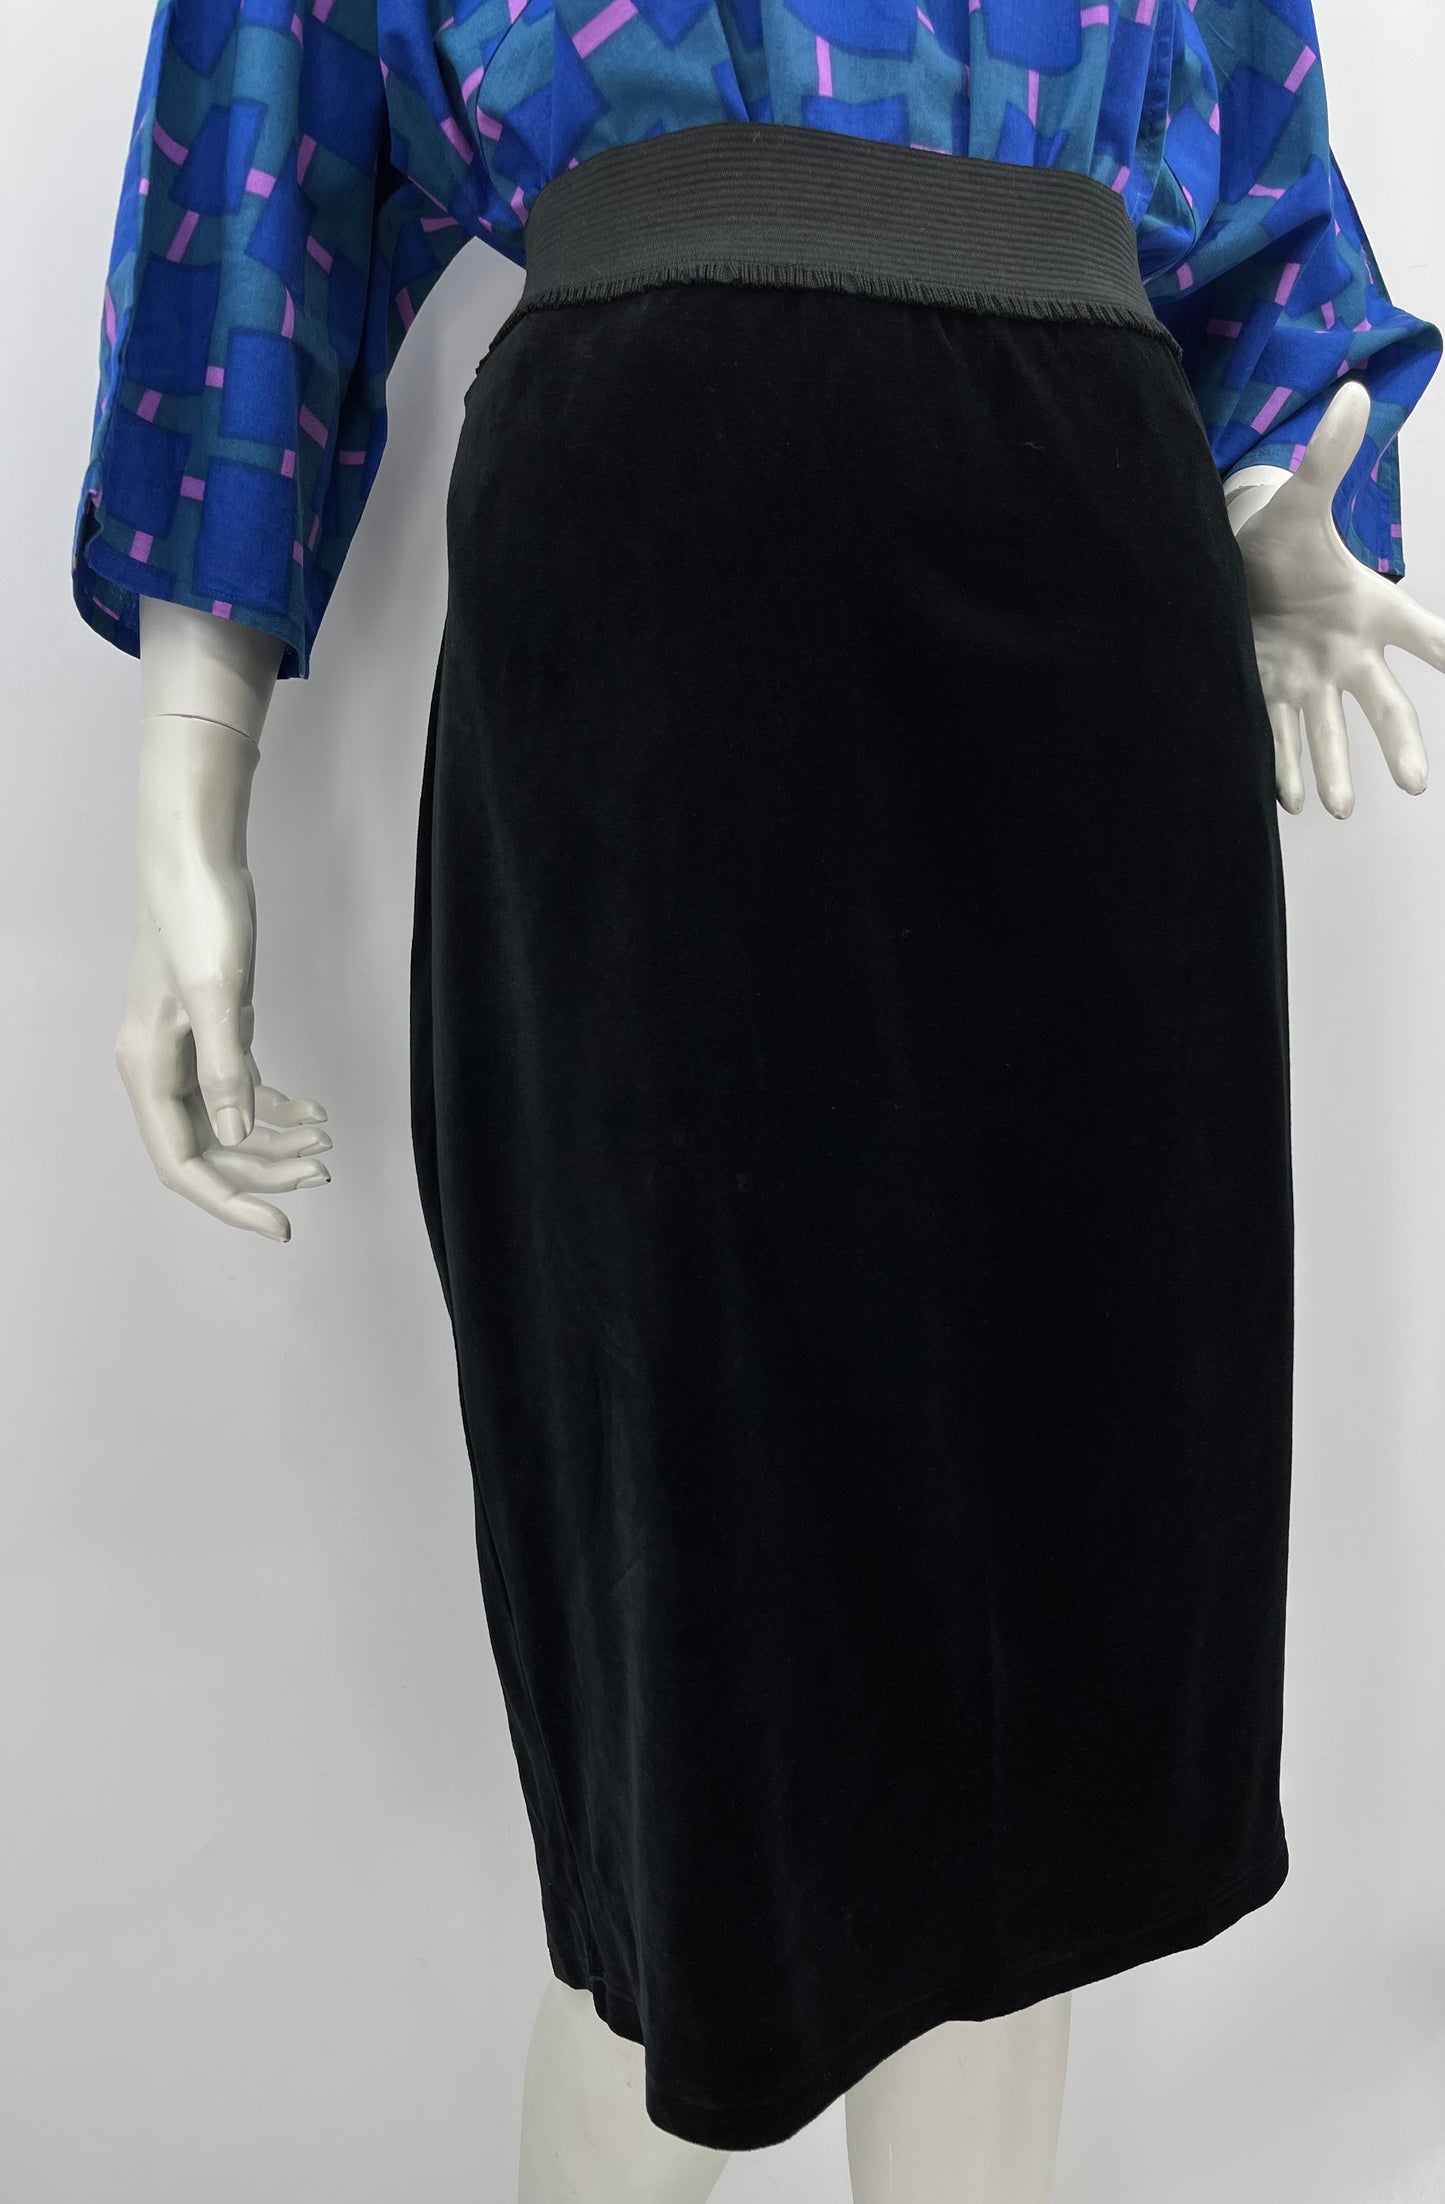 Marimekko, musta samettihame, 2000-luku, vyöt.ymp. 88-106cm, kokoarvio 44